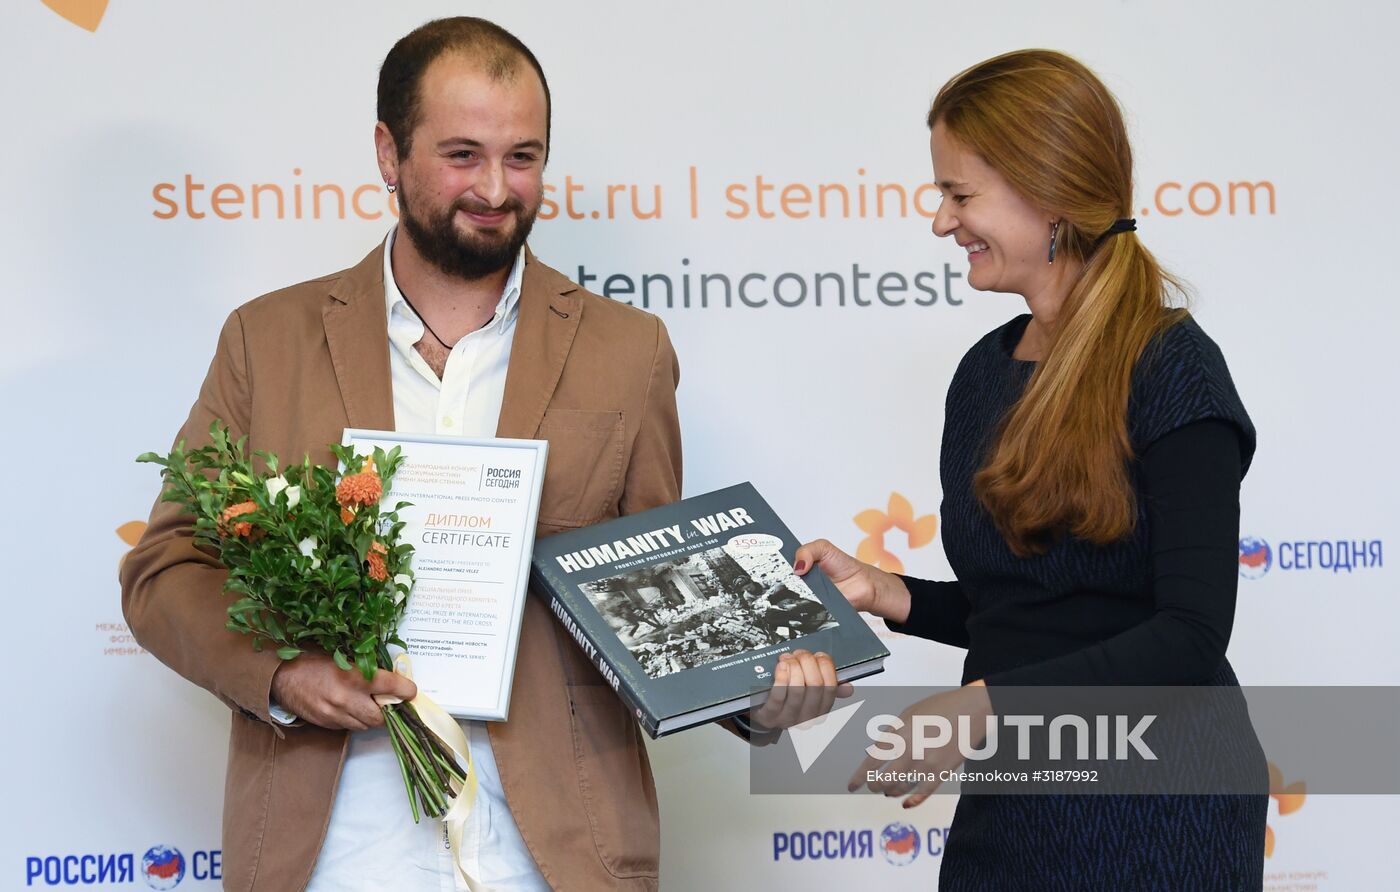 Awards ceremony of Andrei Stenin International Press Photo Contest